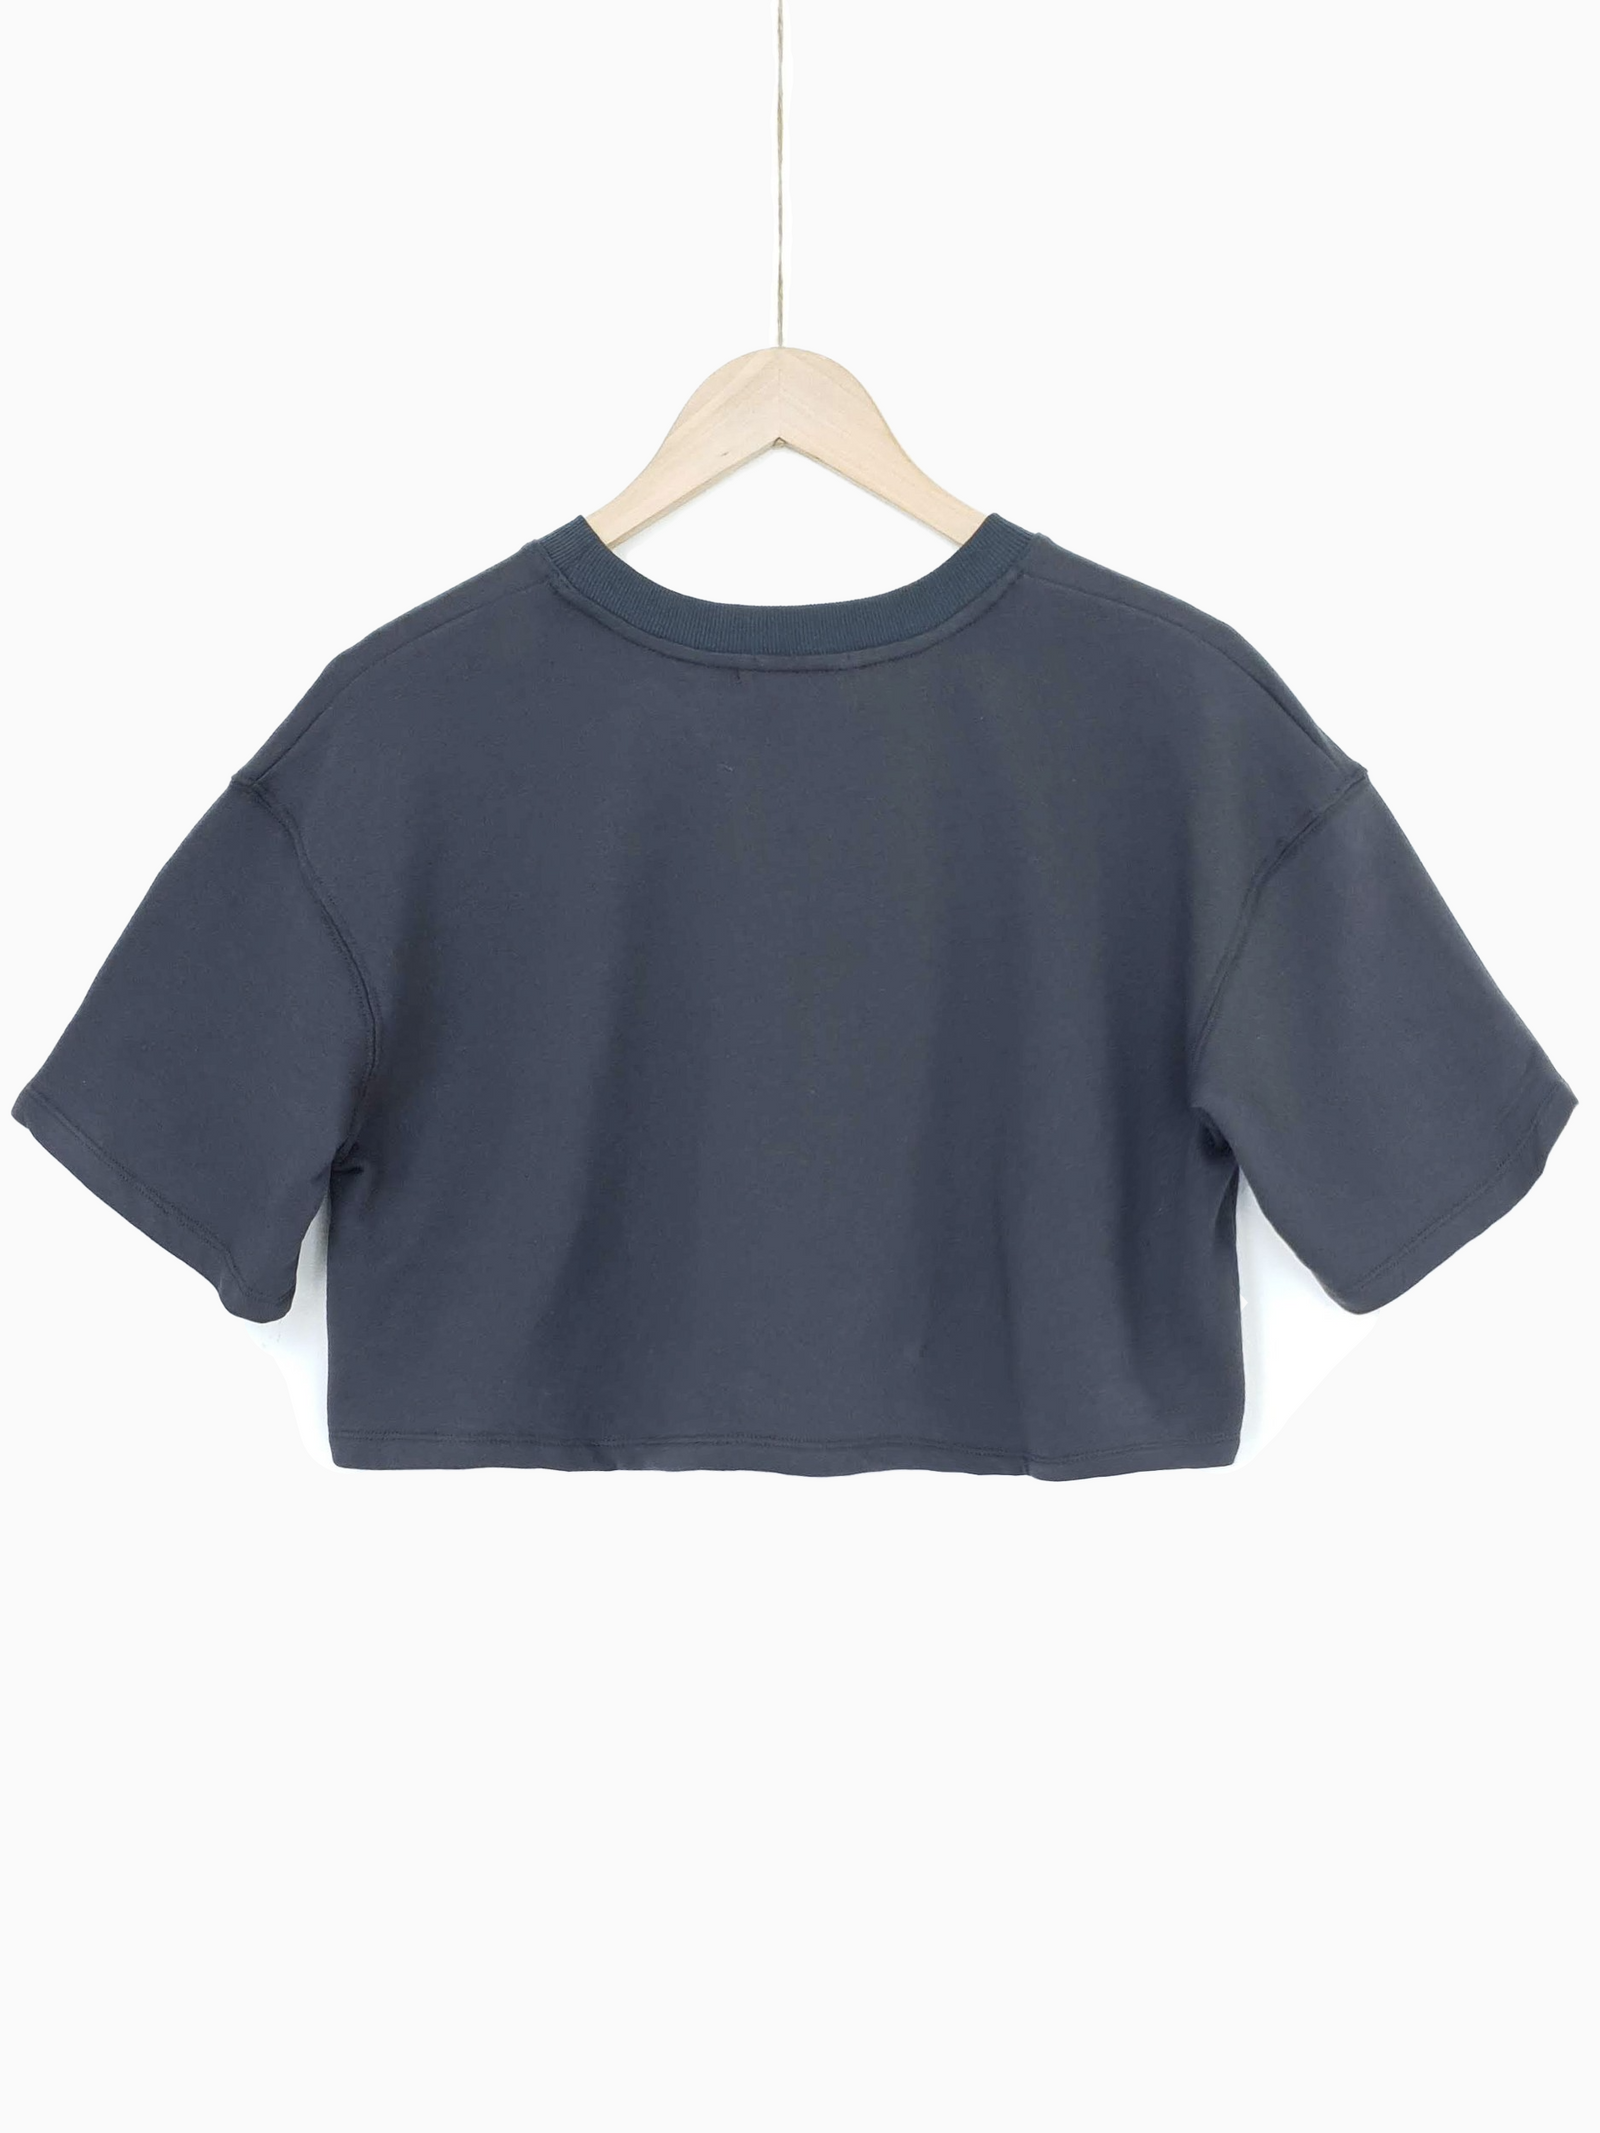 LOLI | Cropped Sweatshirt Top | Anthracite